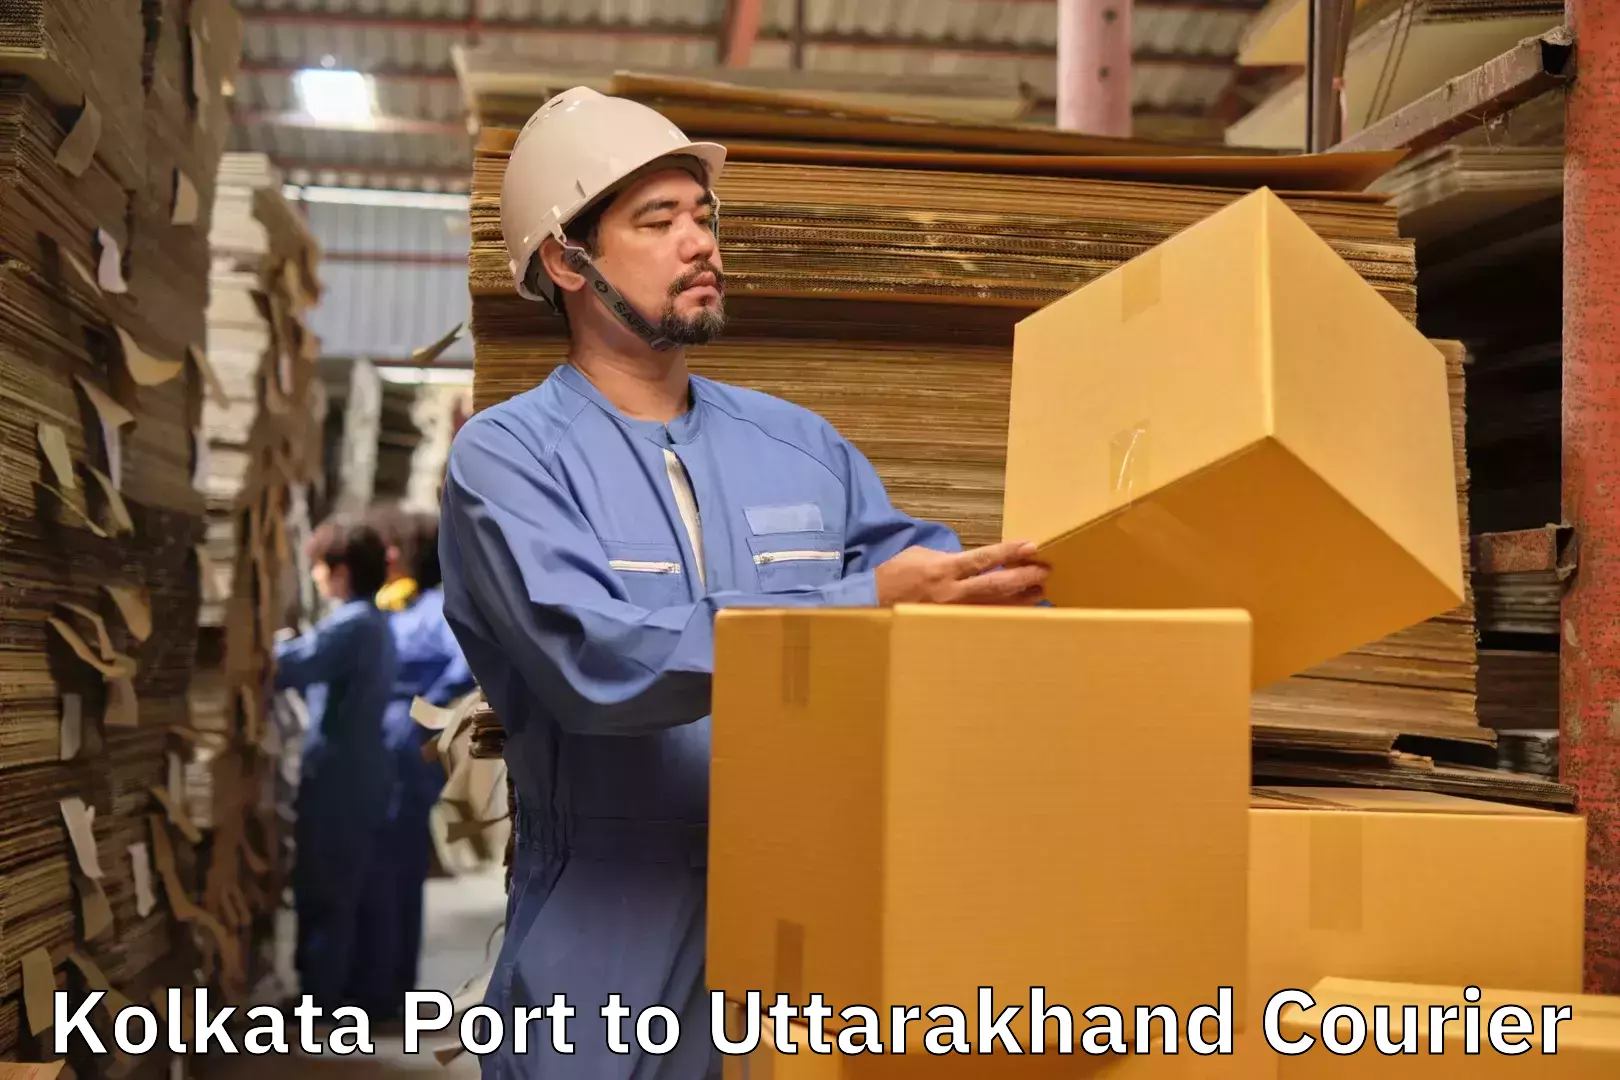 Luggage delivery app Kolkata Port to Gopeshwar